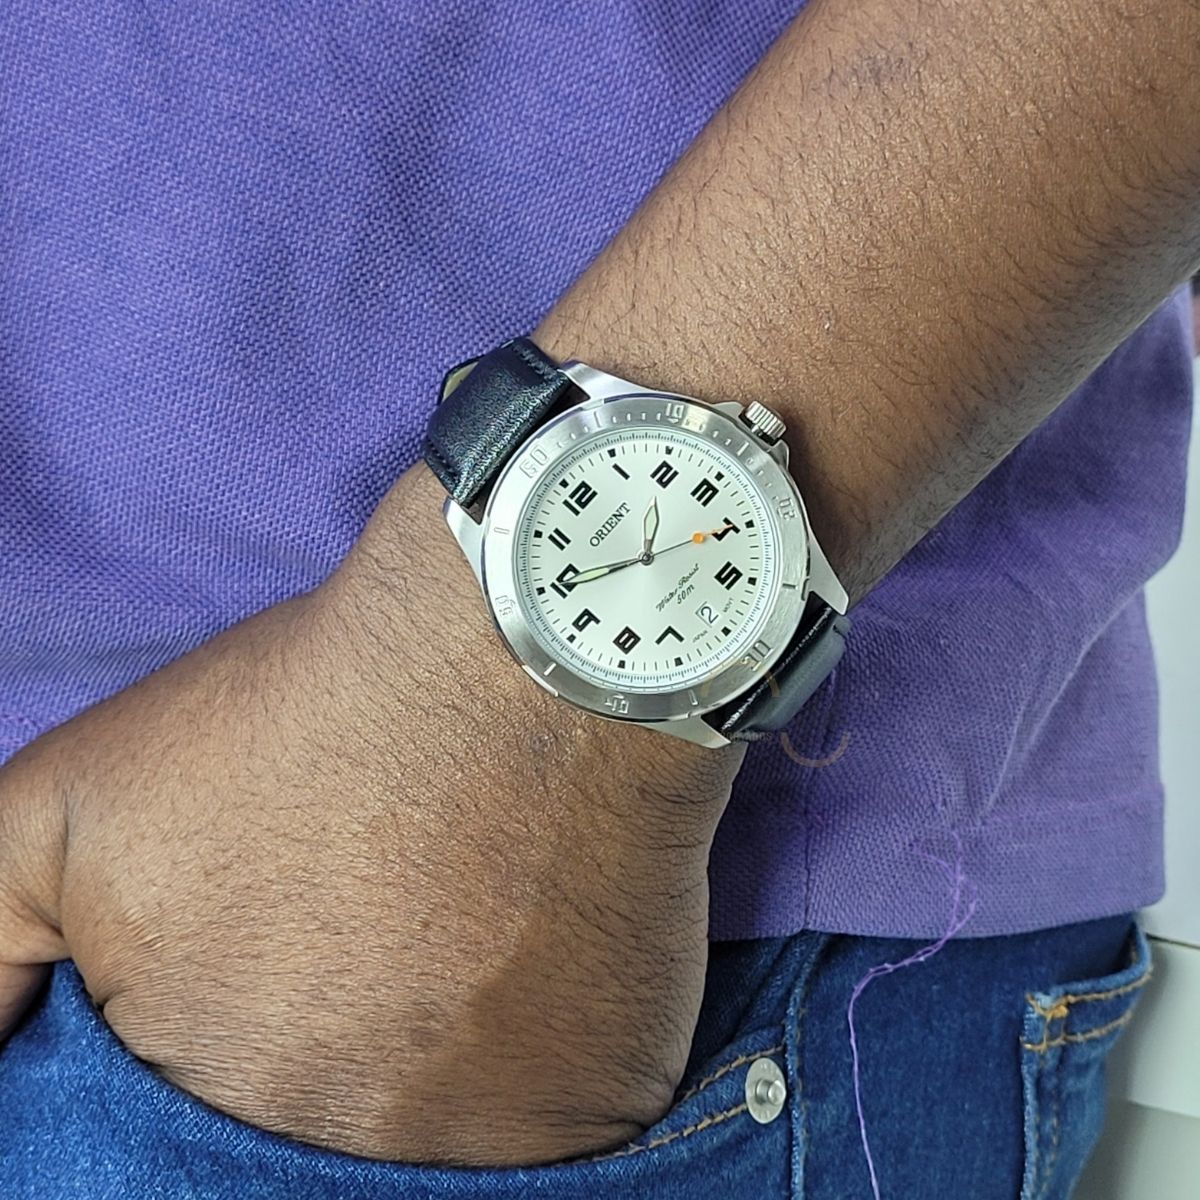 Relógio Orient Masculino Prata MBSC1032 S2PX